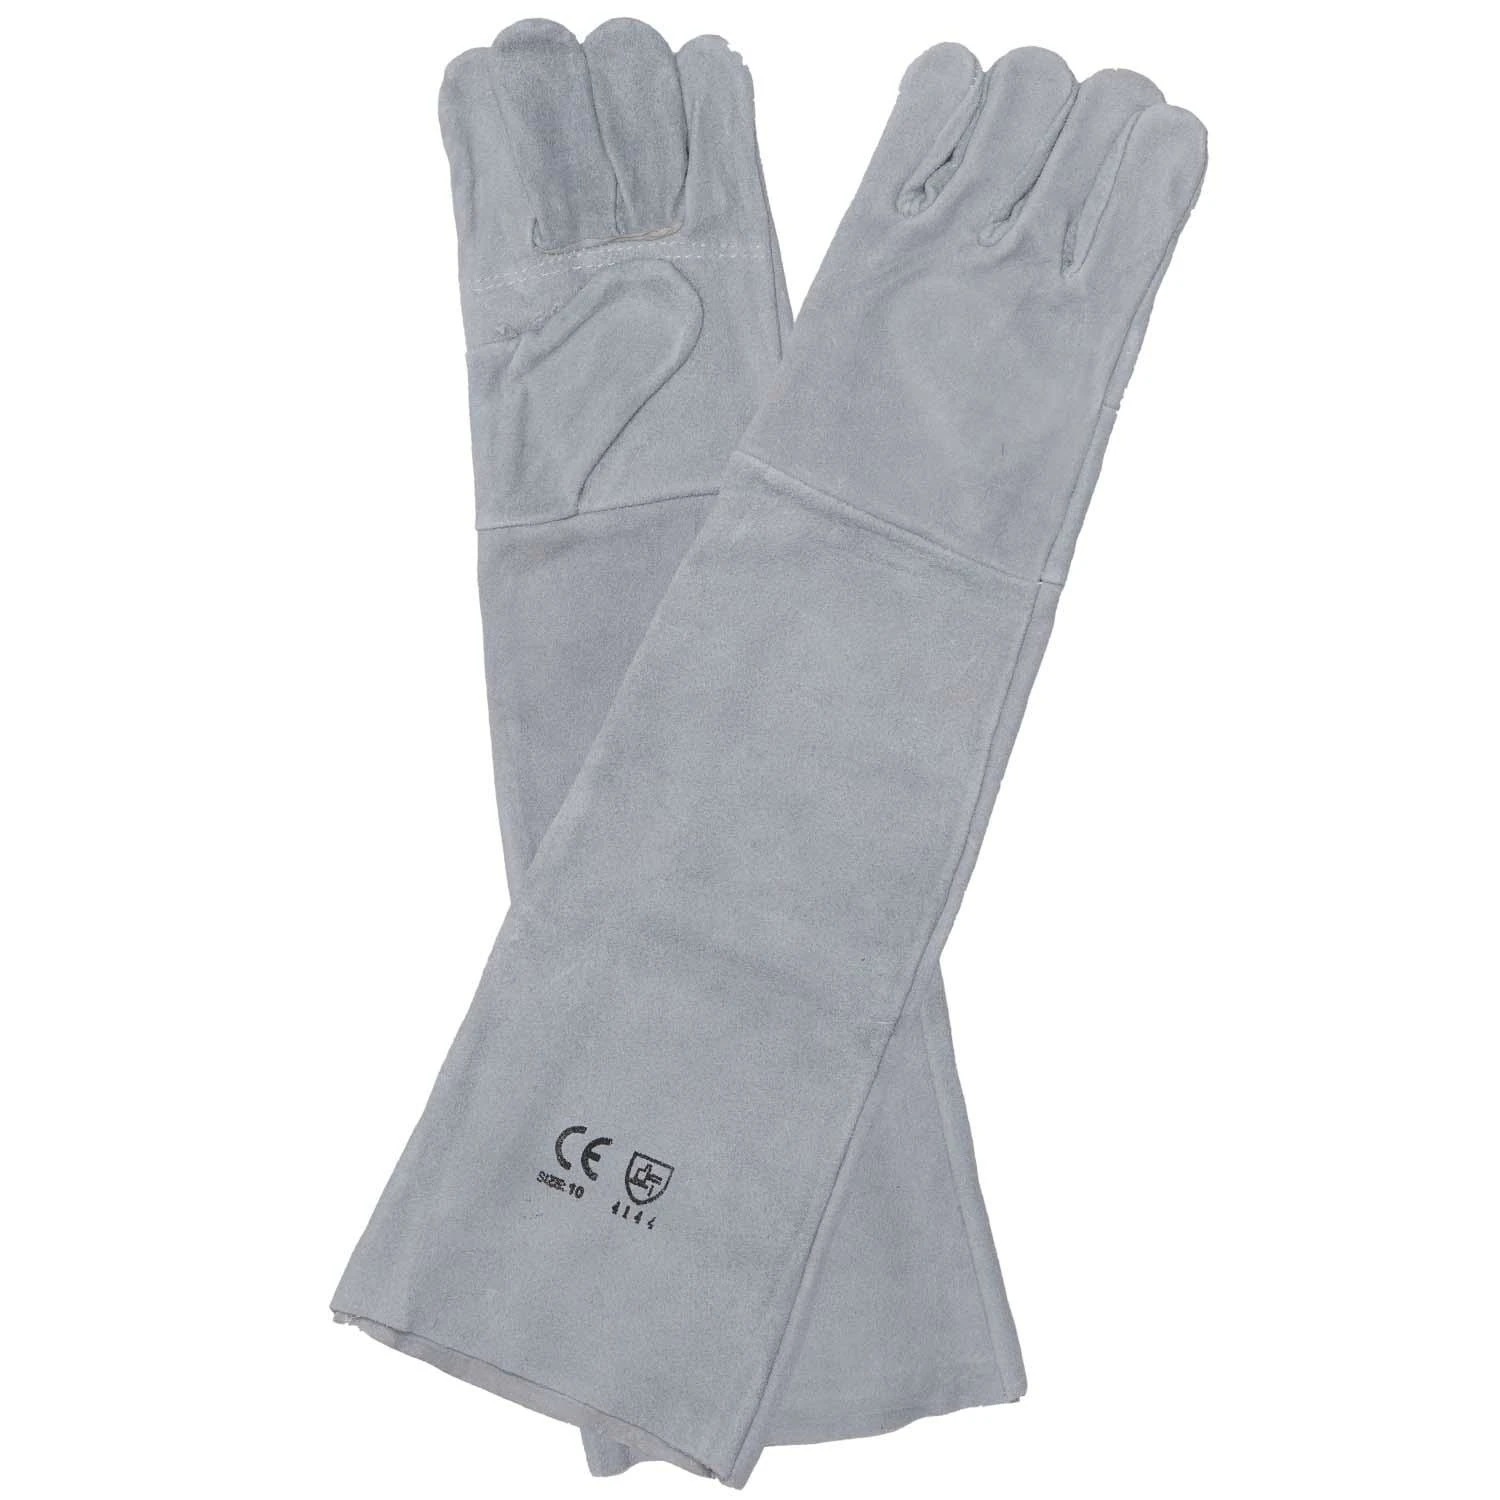 Chrome leather double palm glove shoulder length 16"